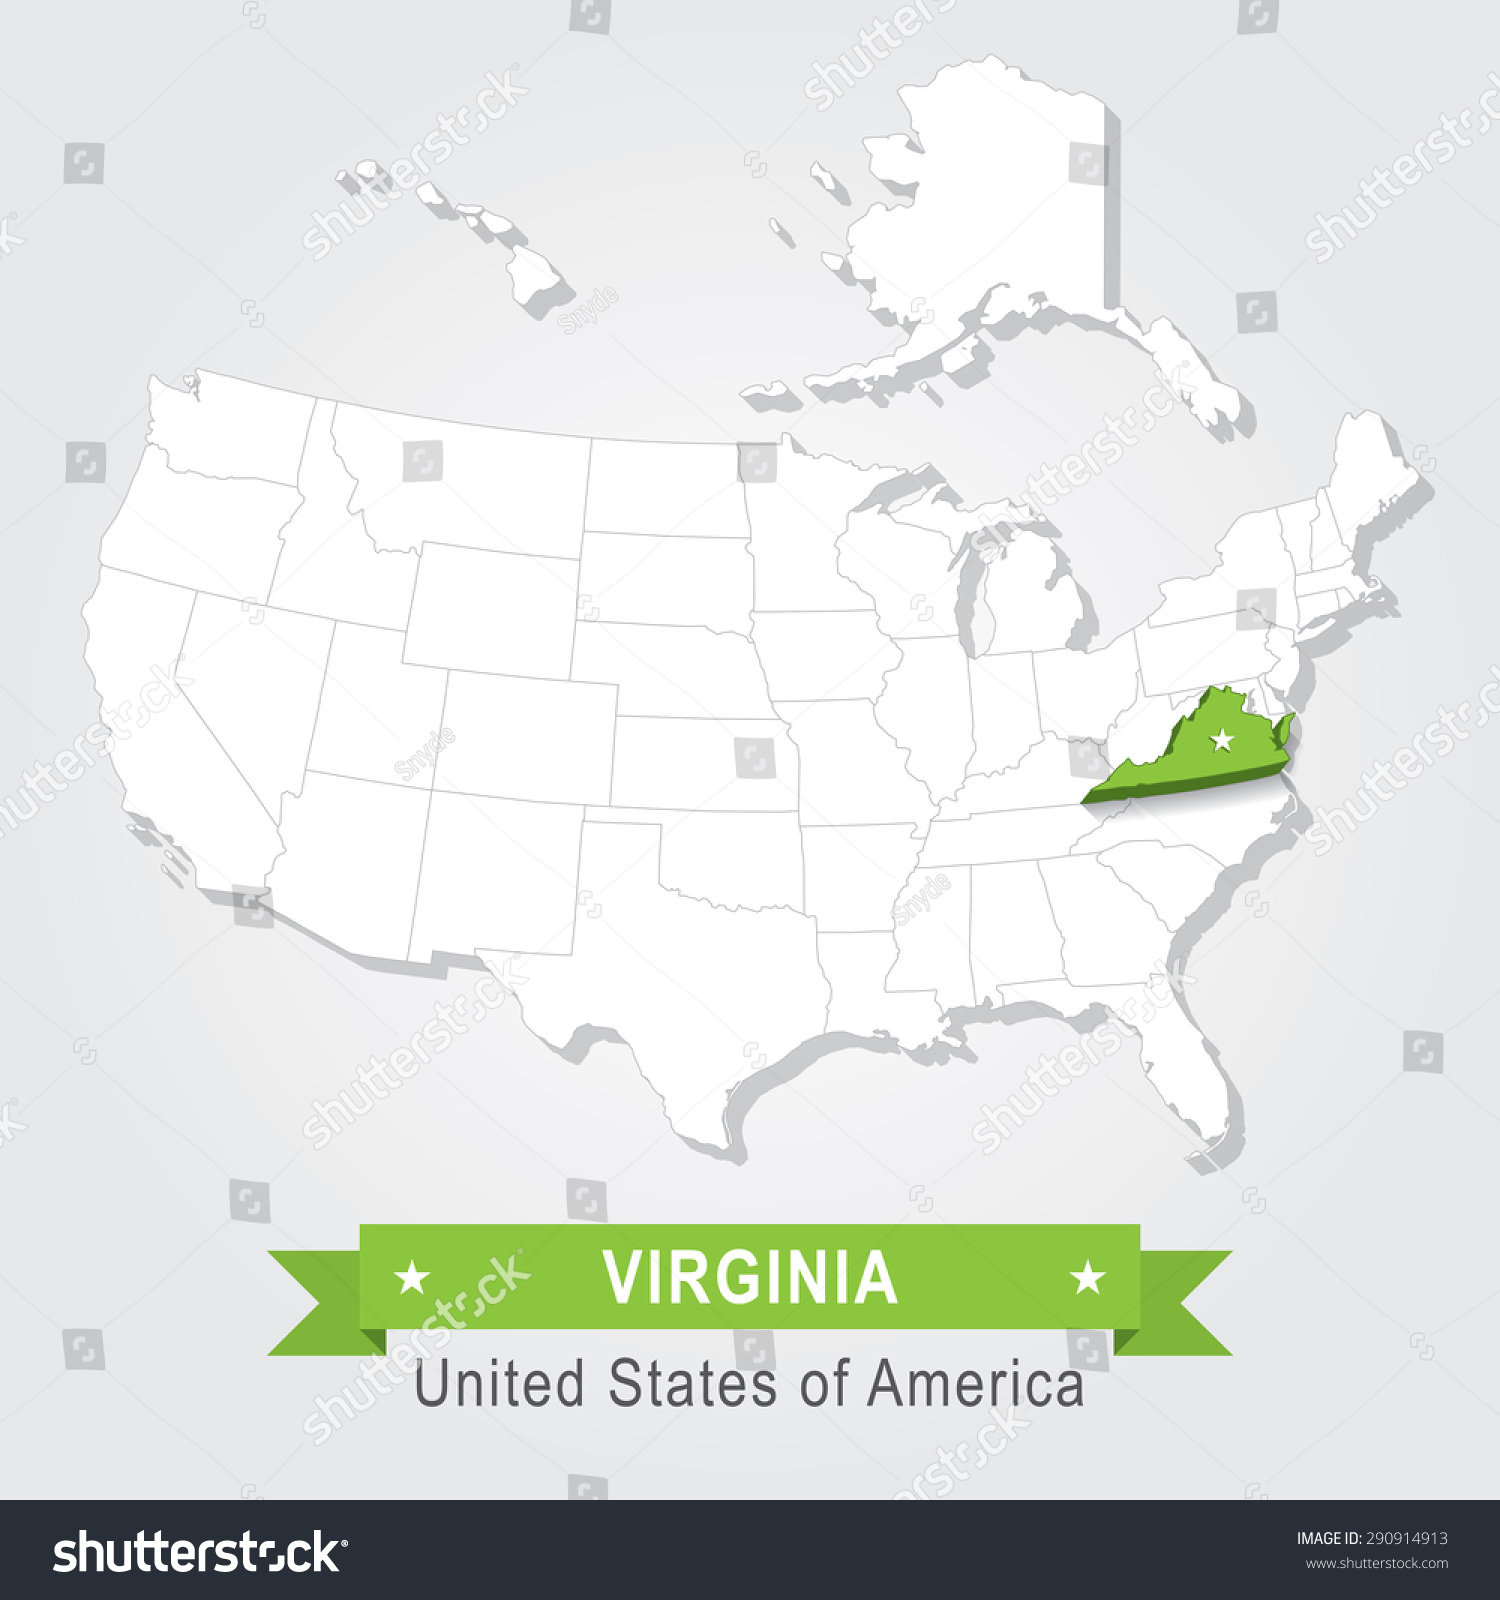 693 Virginia infographic Images, Stock Photos & Vectors | Shutterstock